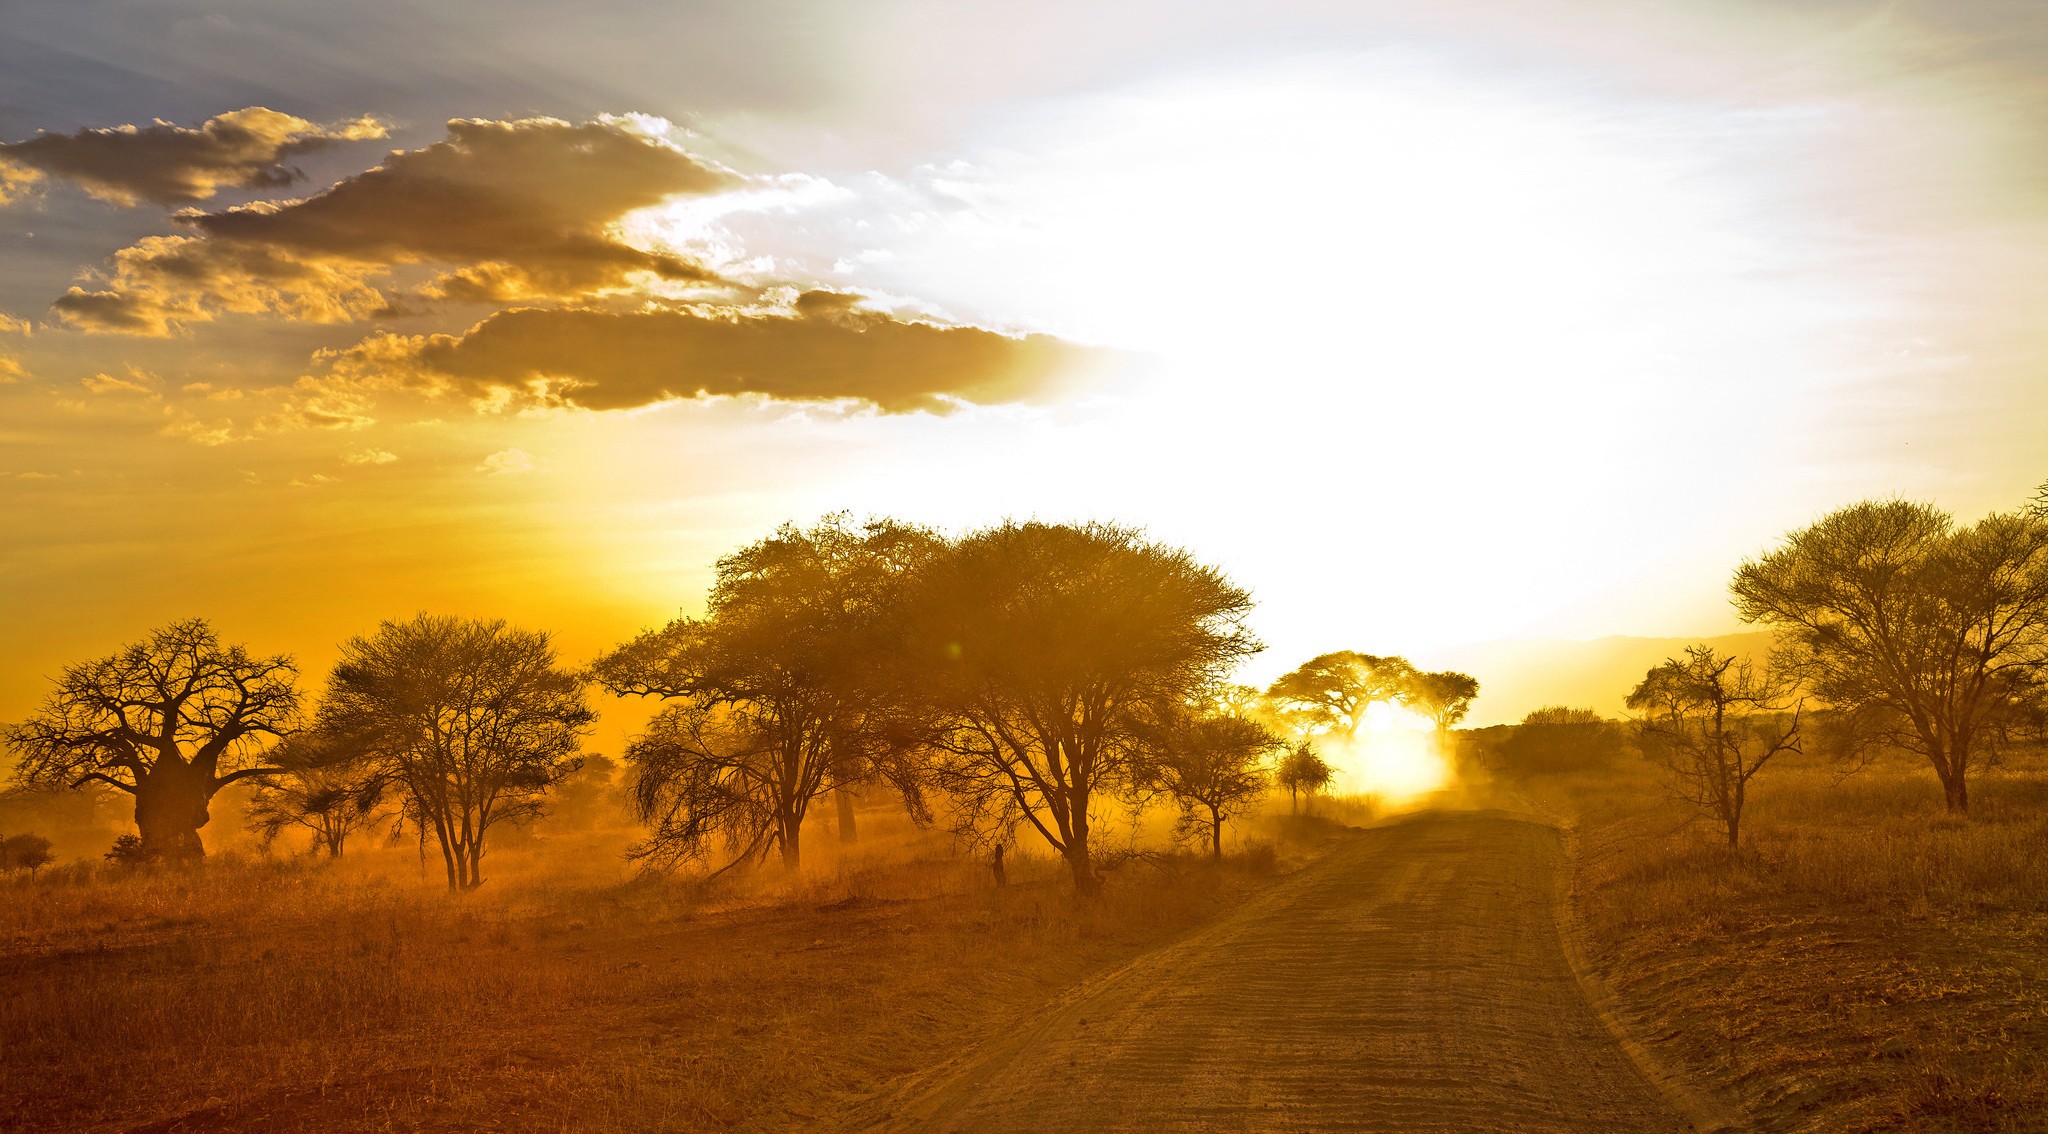 General 2048x1134 landscape Africa savannah trees dirt road sunset nature sky sunlight clouds